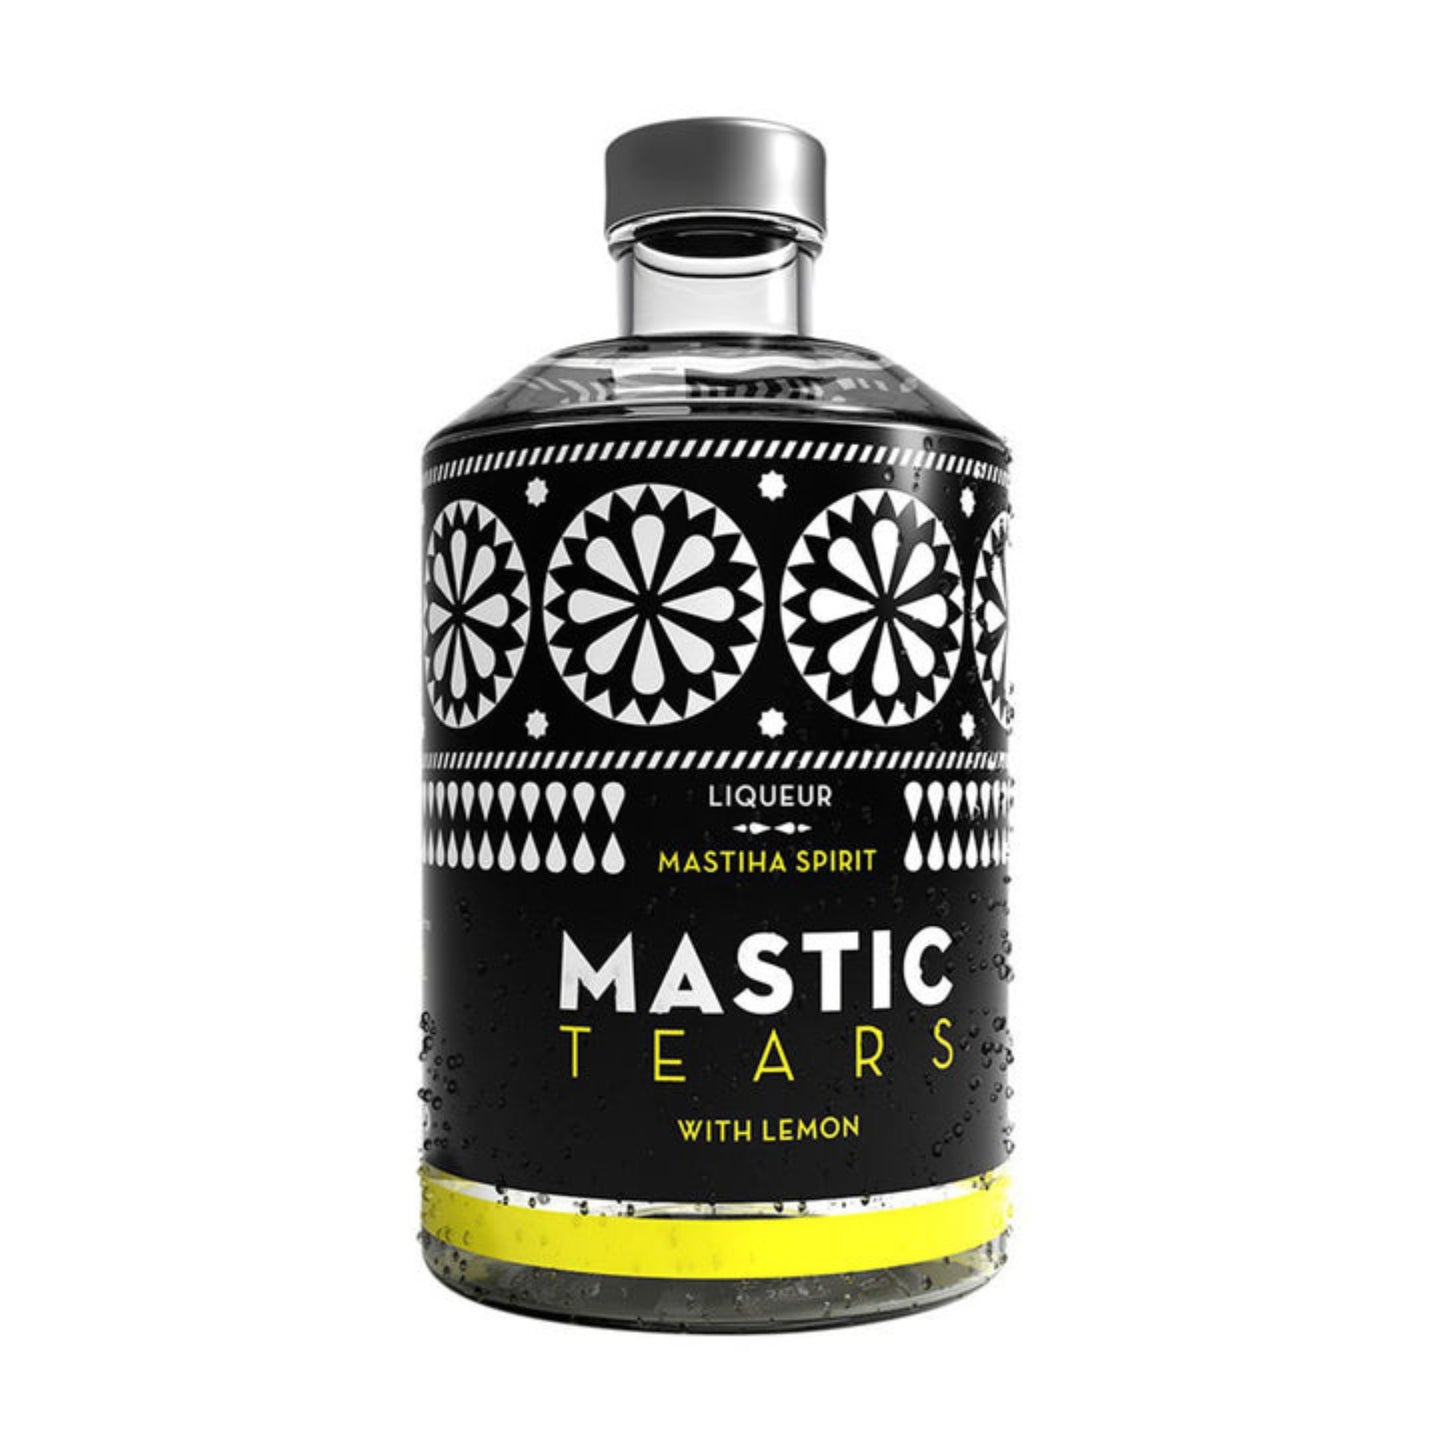 Mastic Tears with Lemon - 700ml